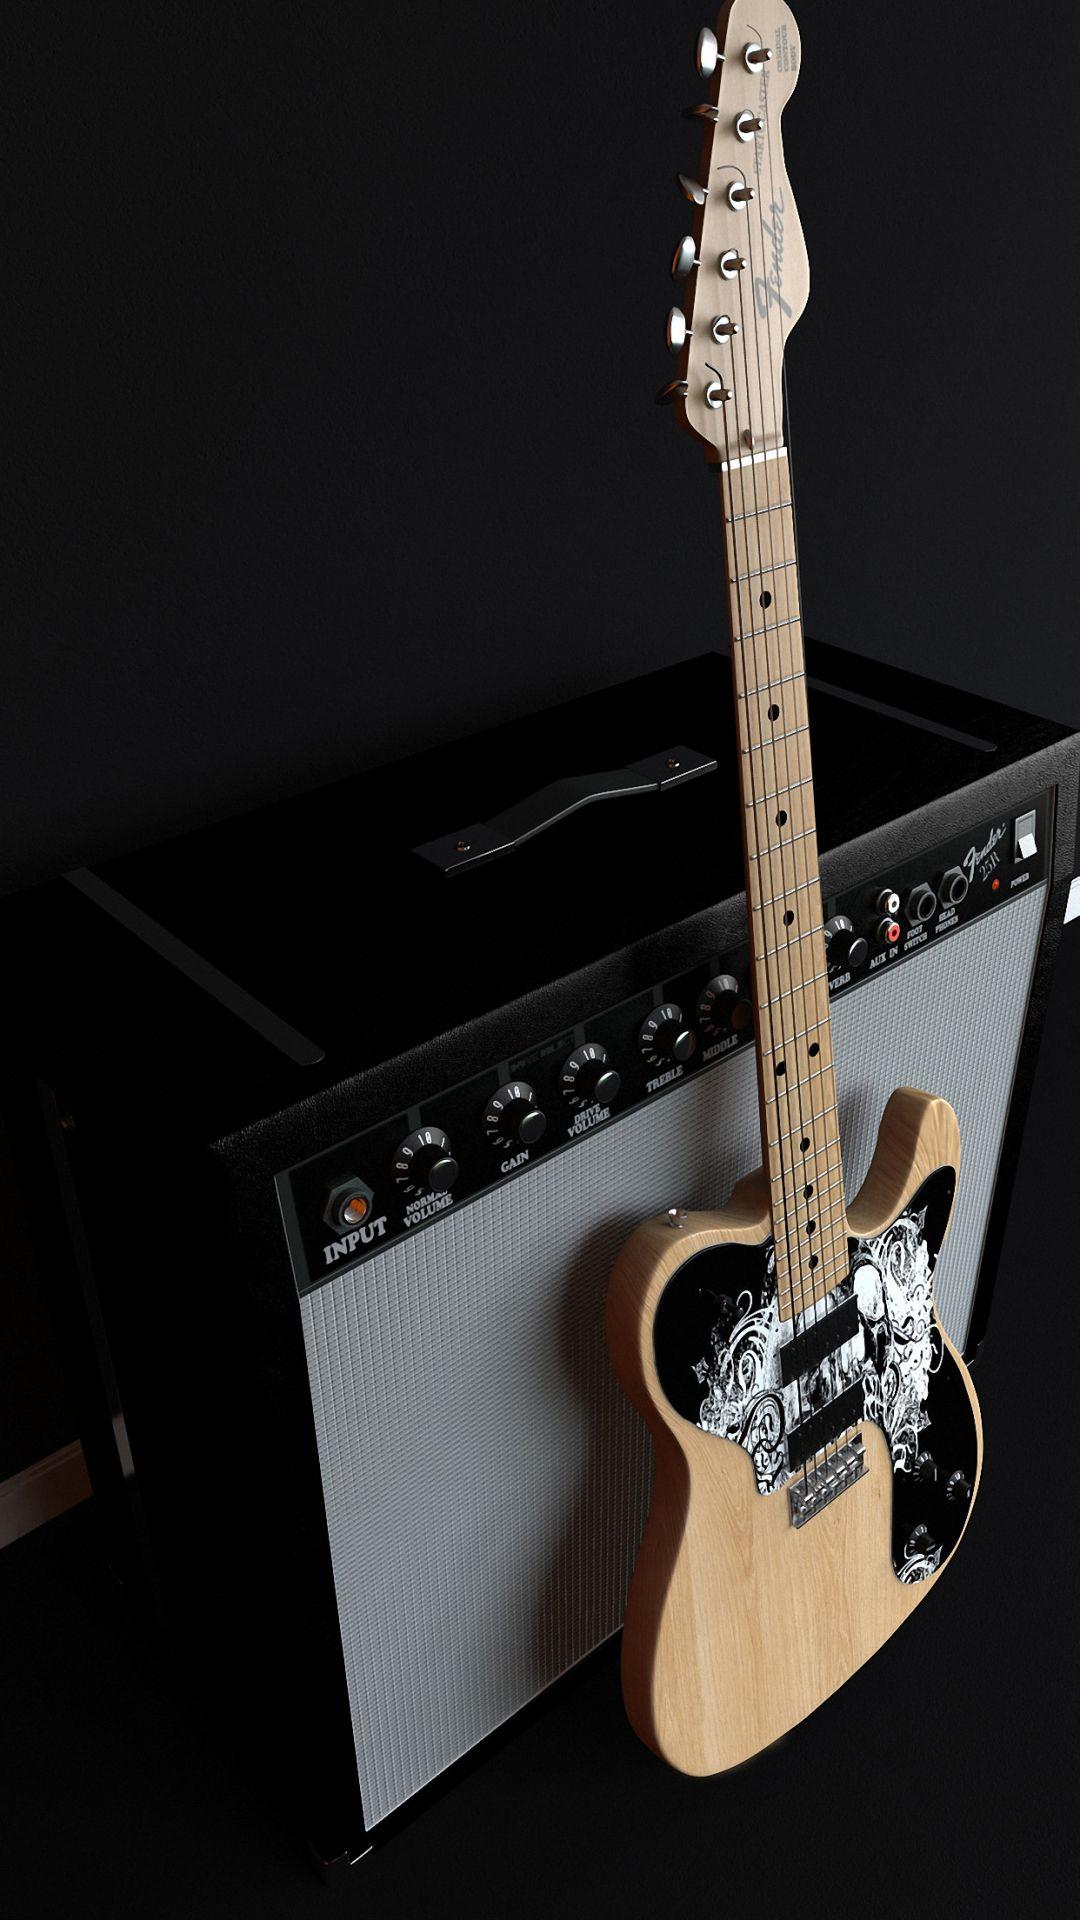 Fender Music Guitar iPhone 6s Wallpaper HD